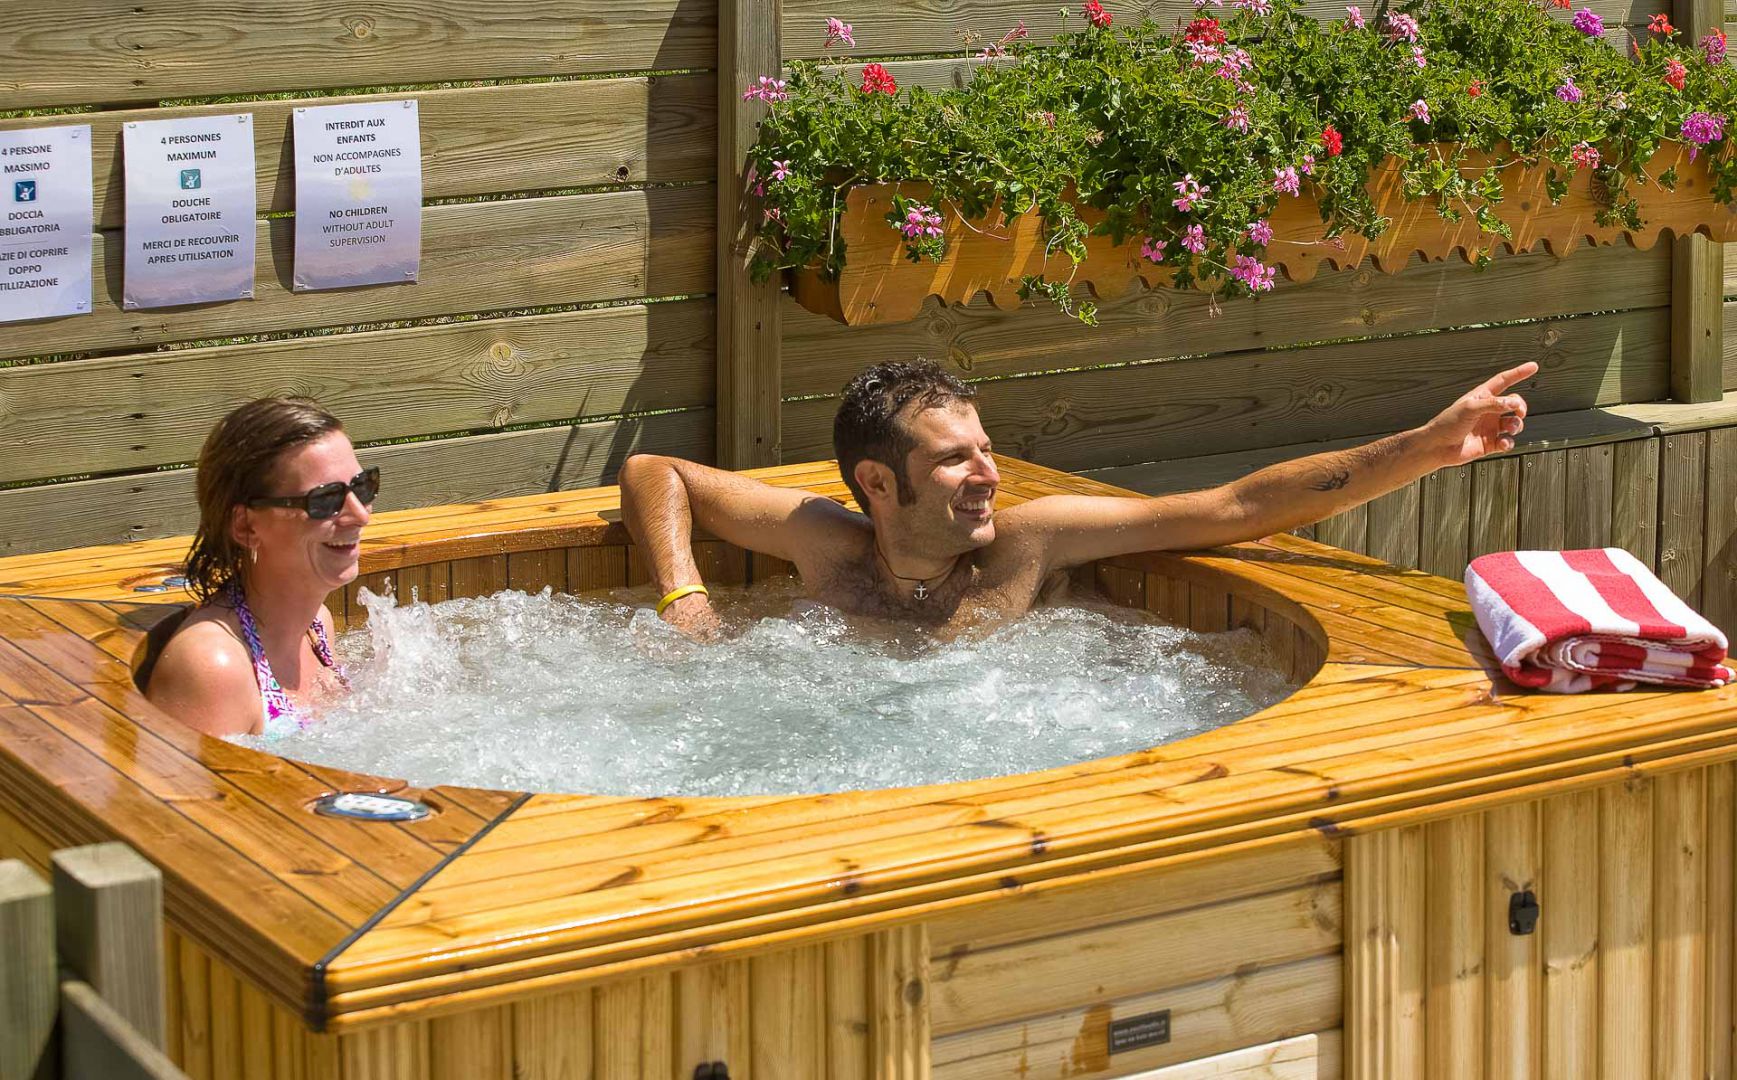 outdoor hot tub